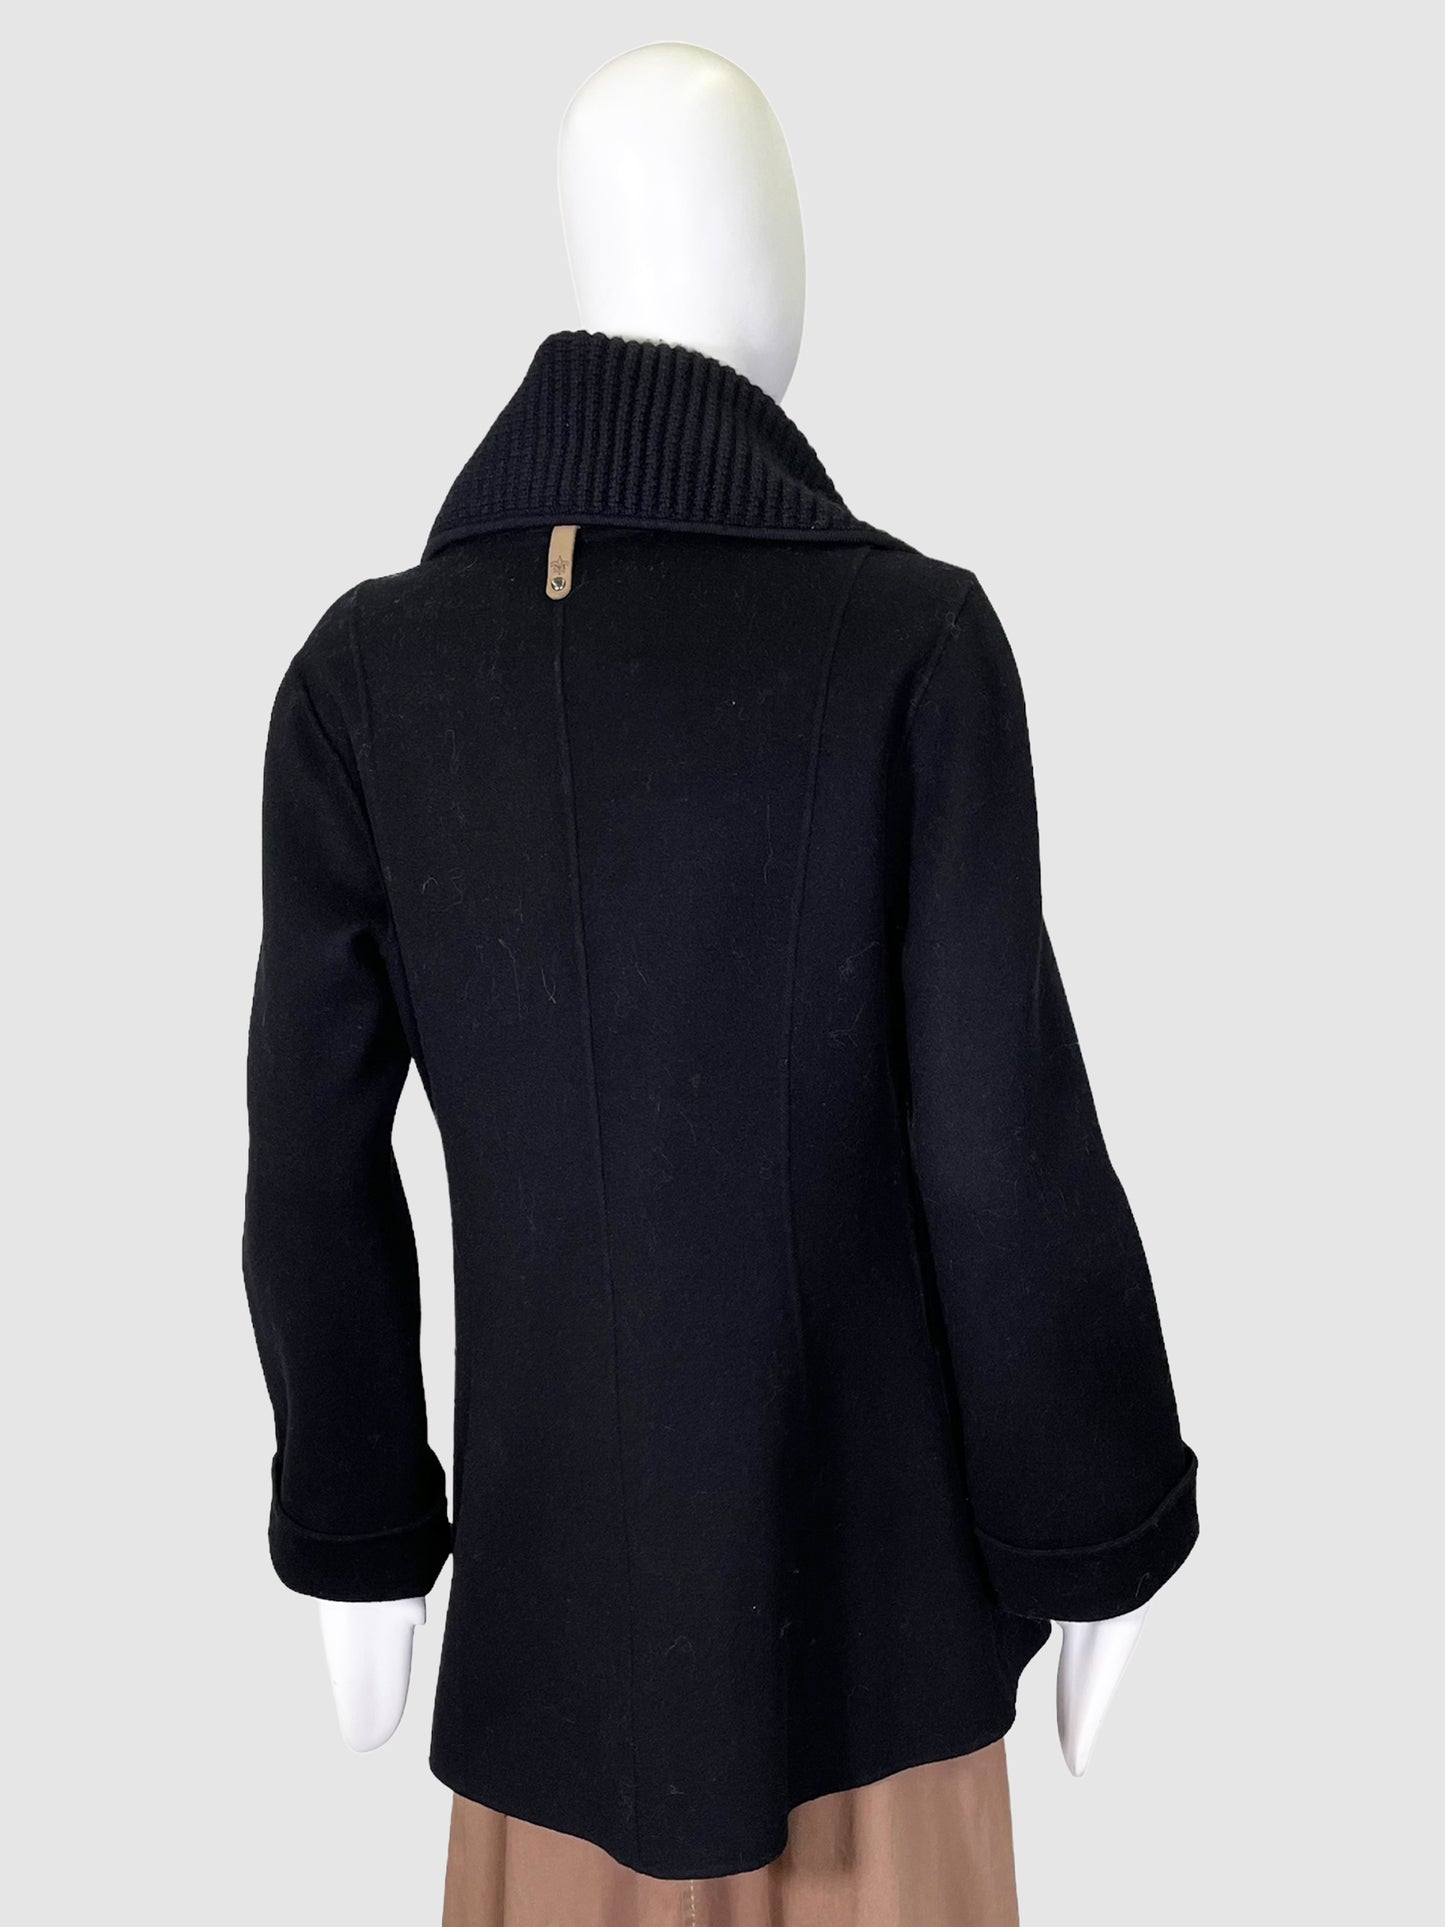 Mackage Black Ribbed Wool Jacket - Size M